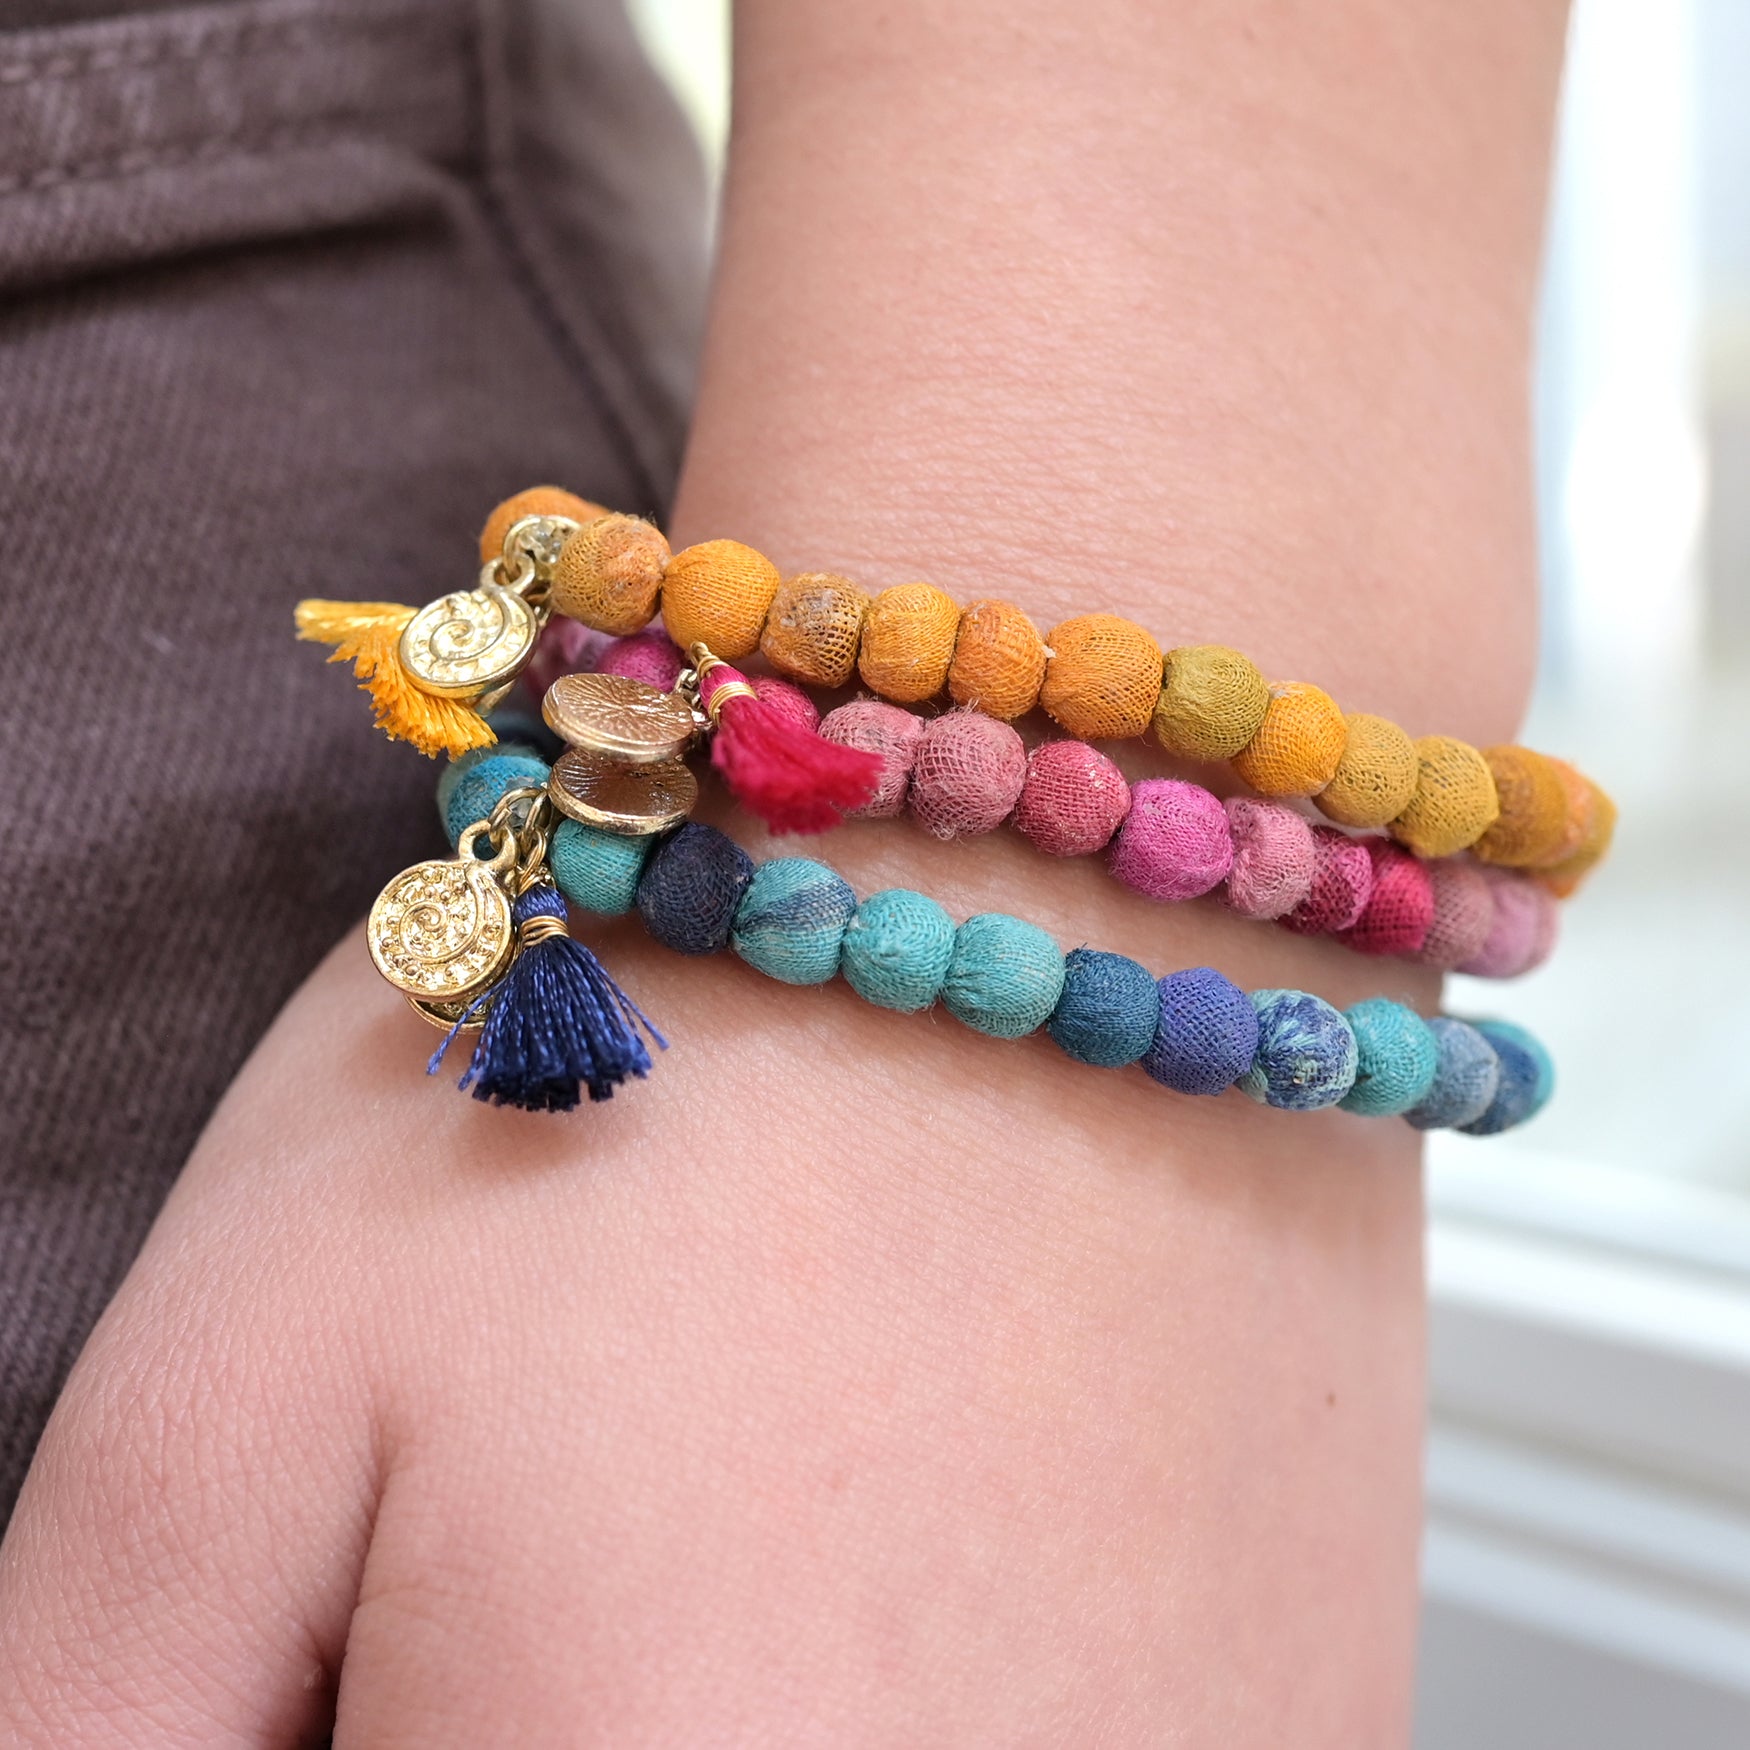 A blue, yellow and pink bracelets adorn a wrist.